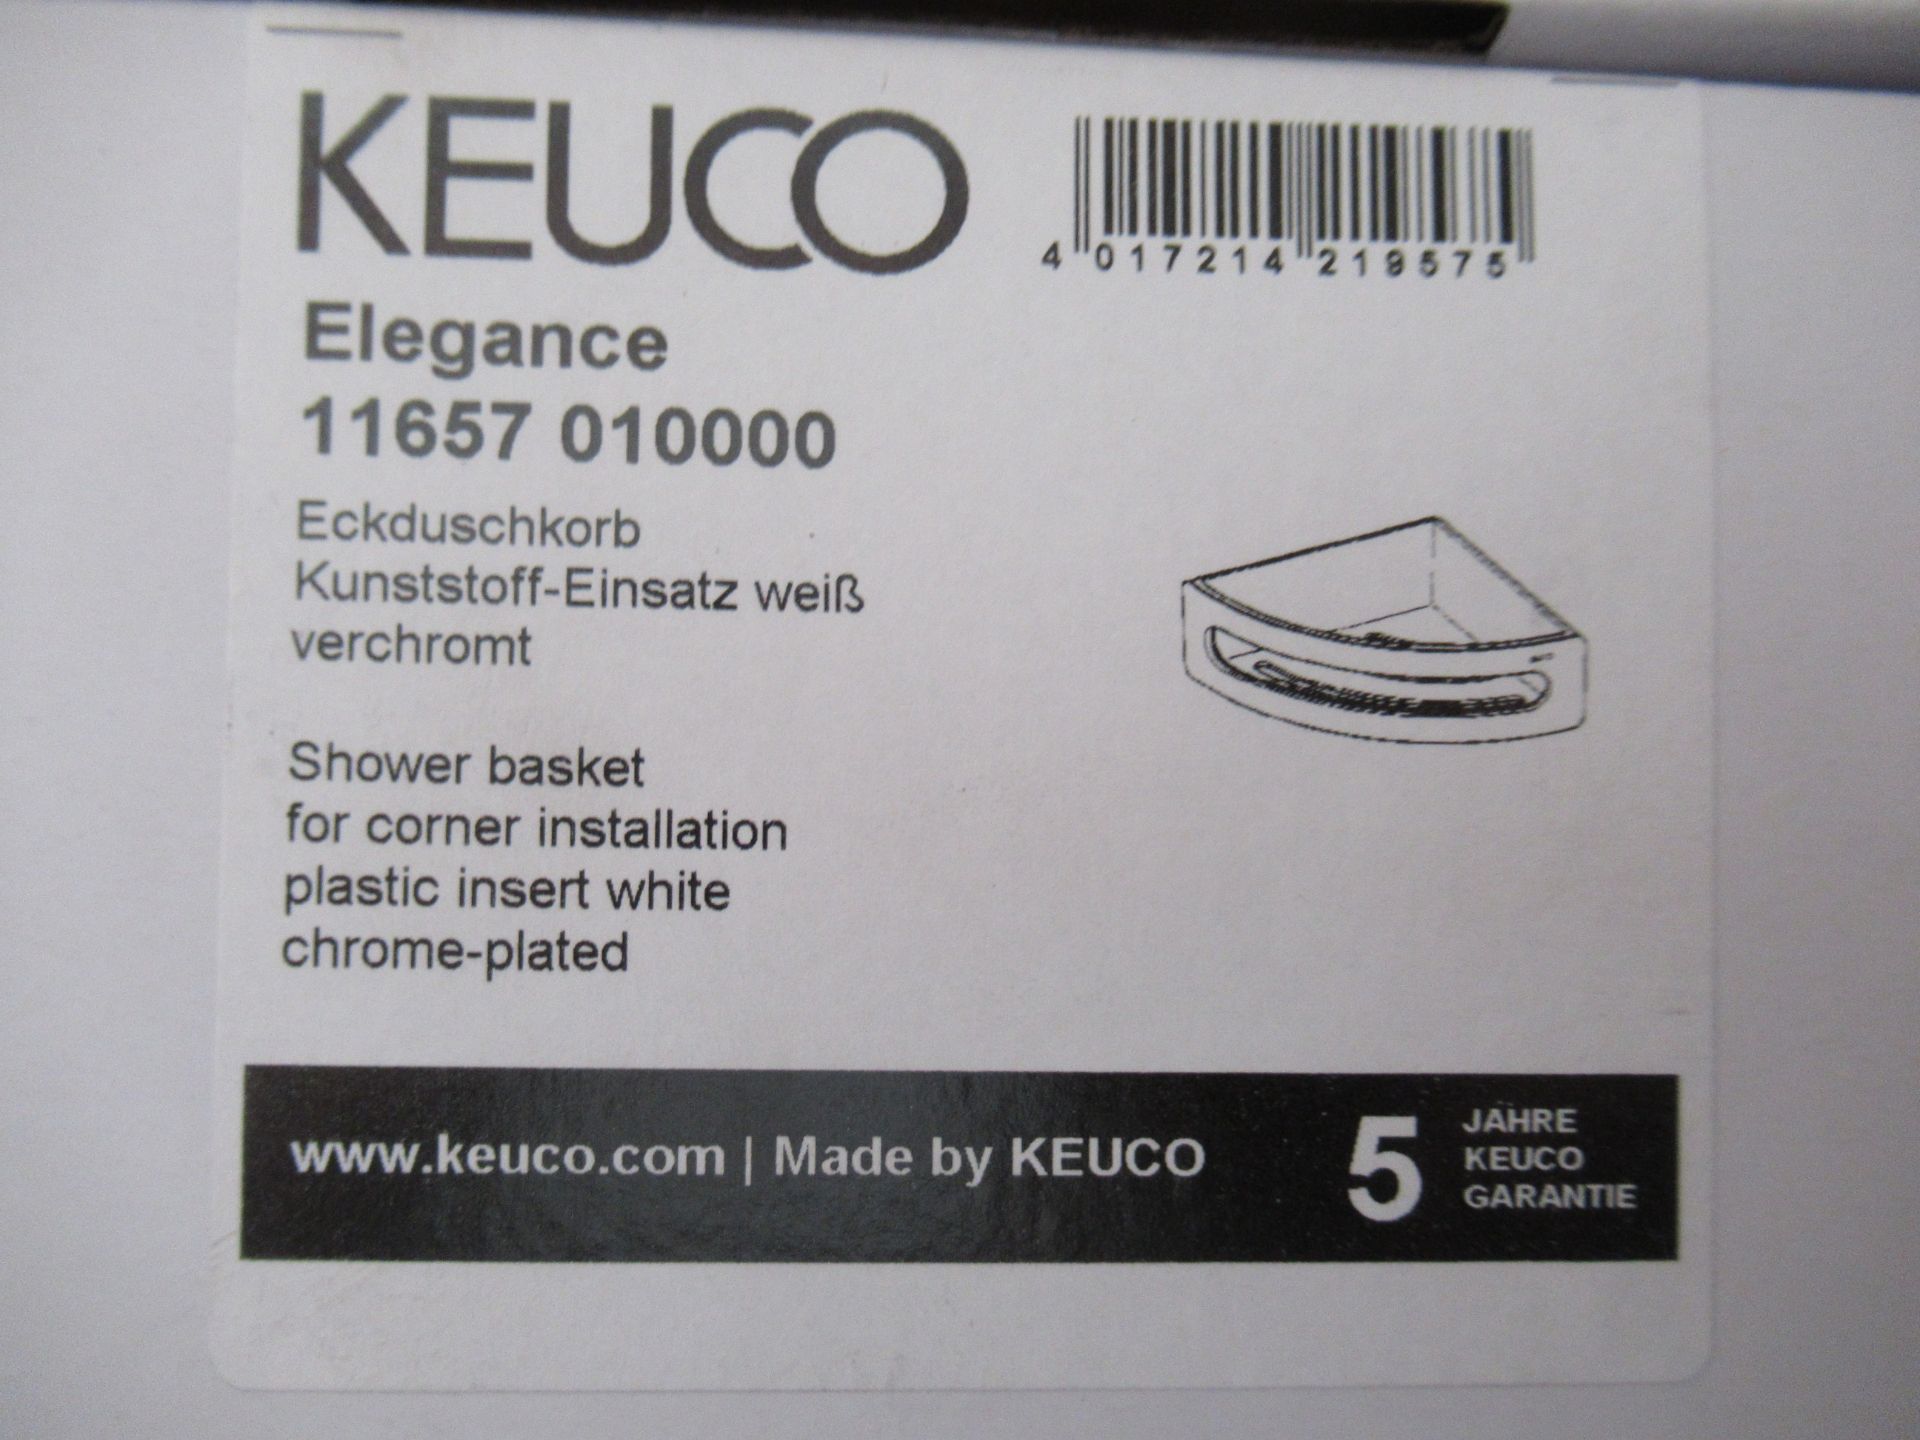 2 x Keuco Elegance Shower Basket, Chrome Plated, P/N 11657-010000